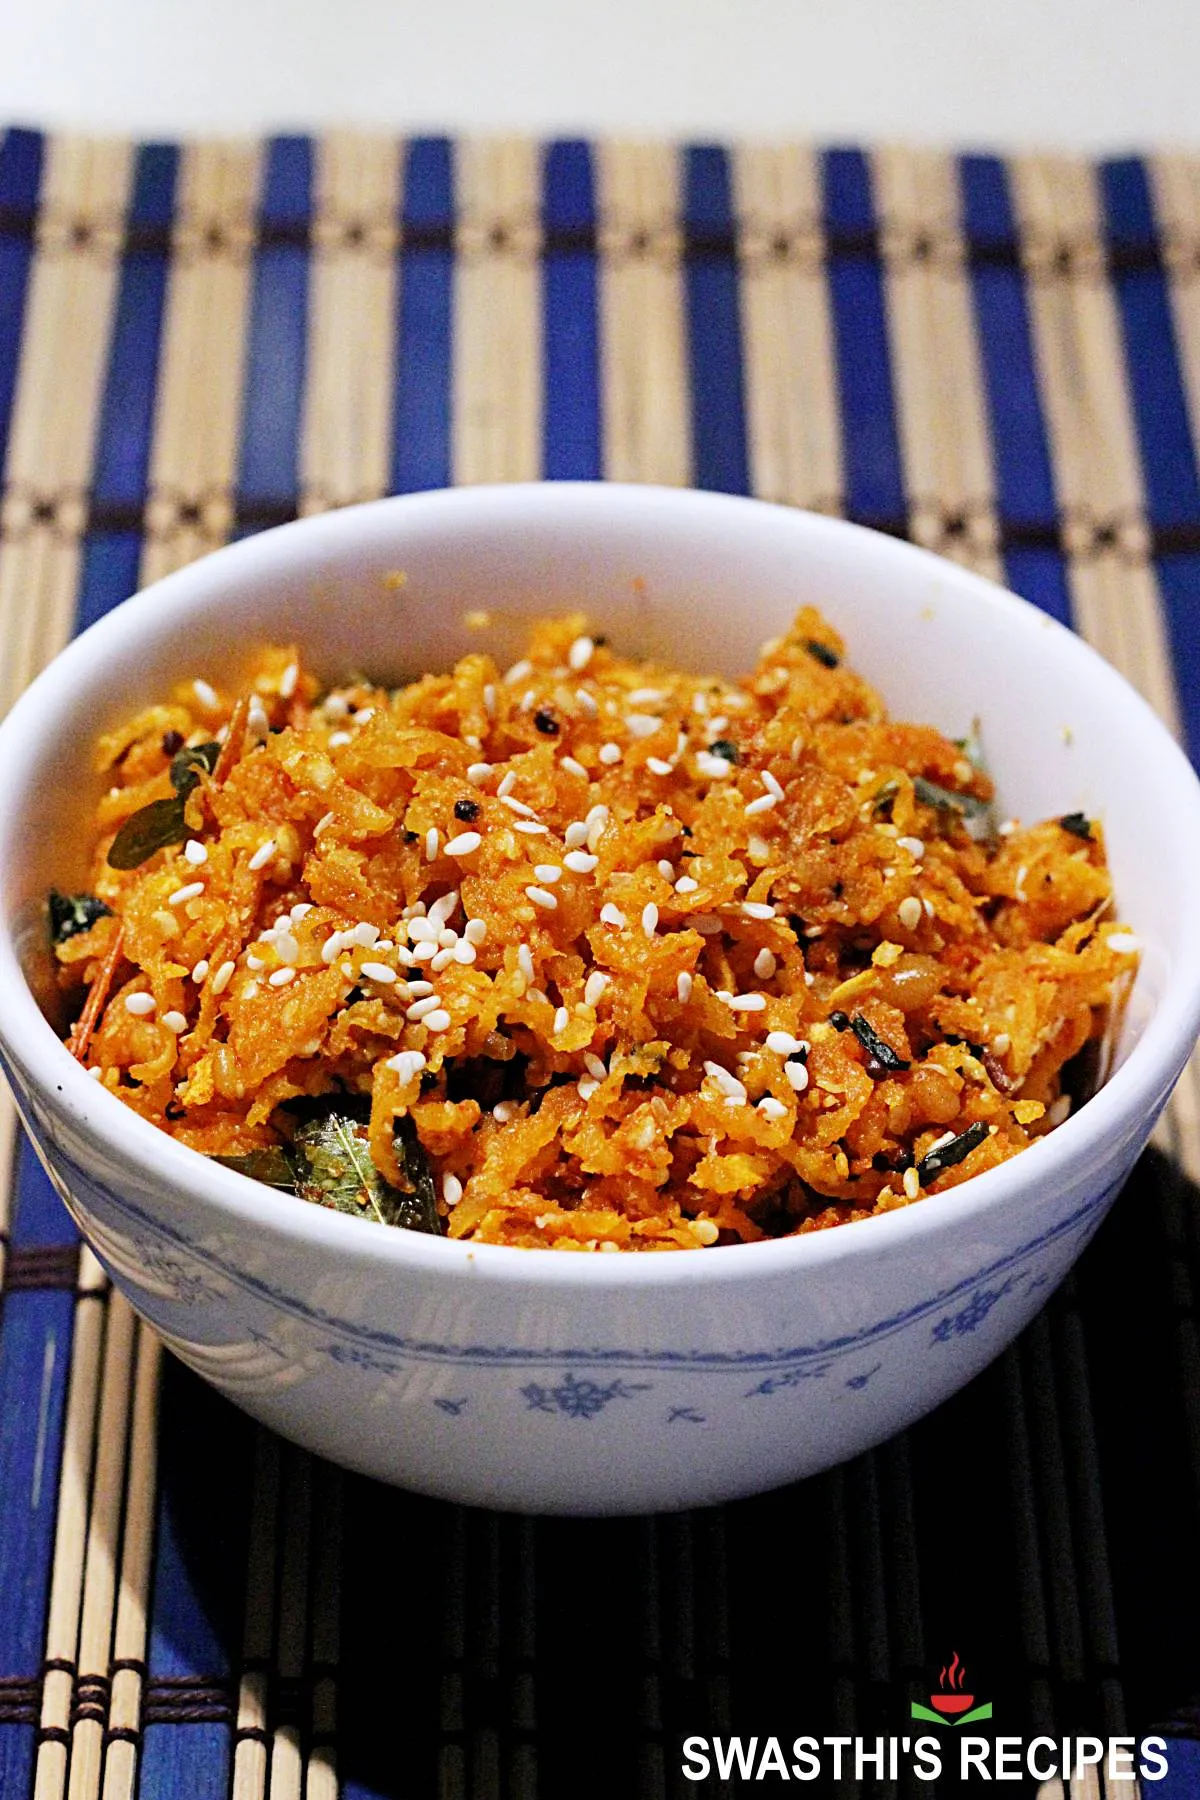 mullangi curry is Indian style radish stir fry